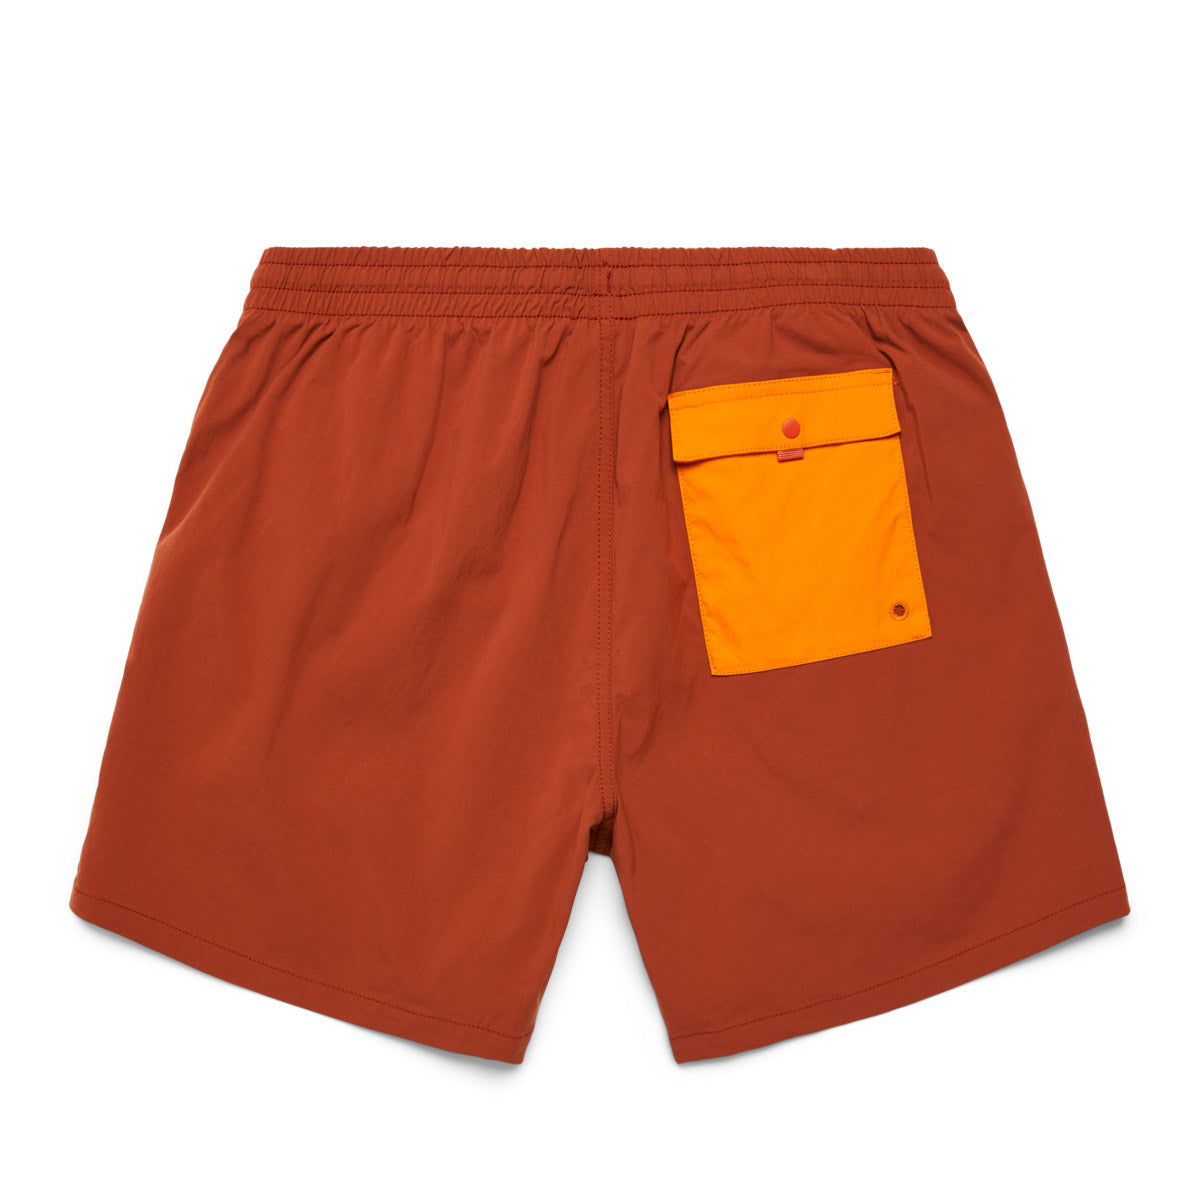 Brinco shorts whith contrasting pocket